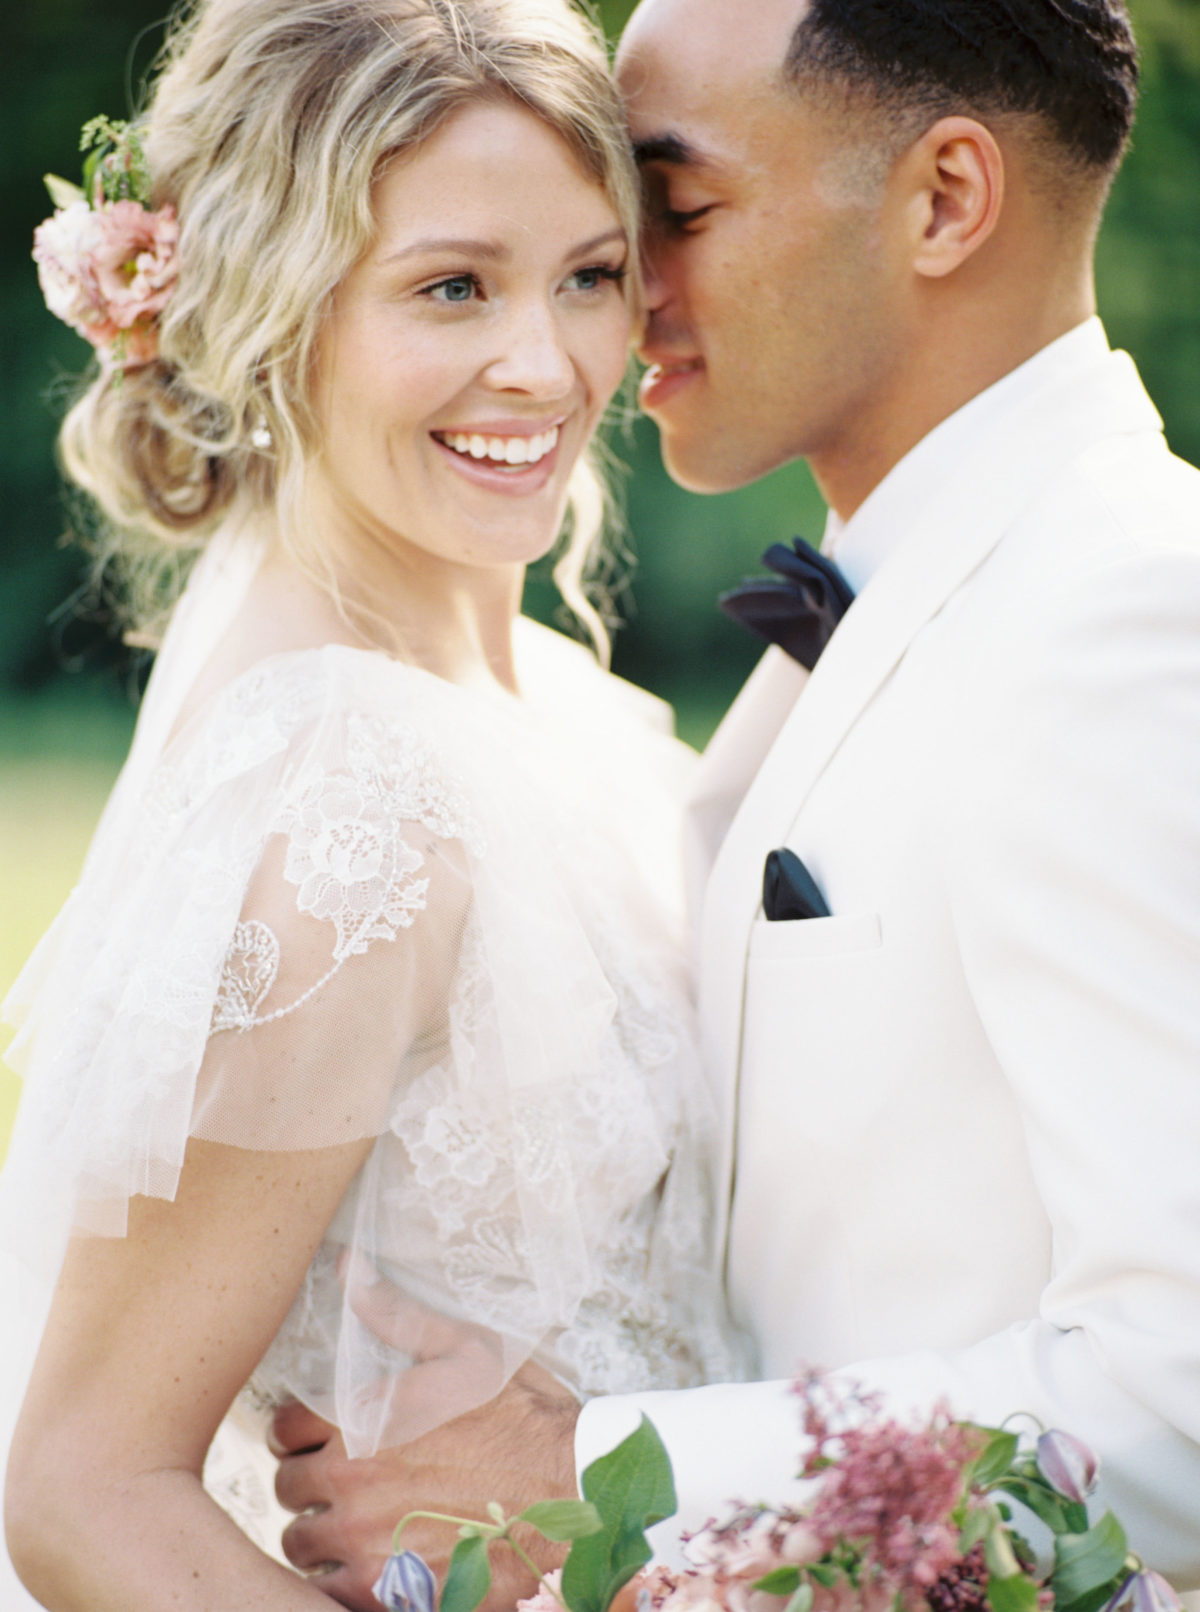 Nashville wedding photographer Michelle Whitley capture model couple in love.